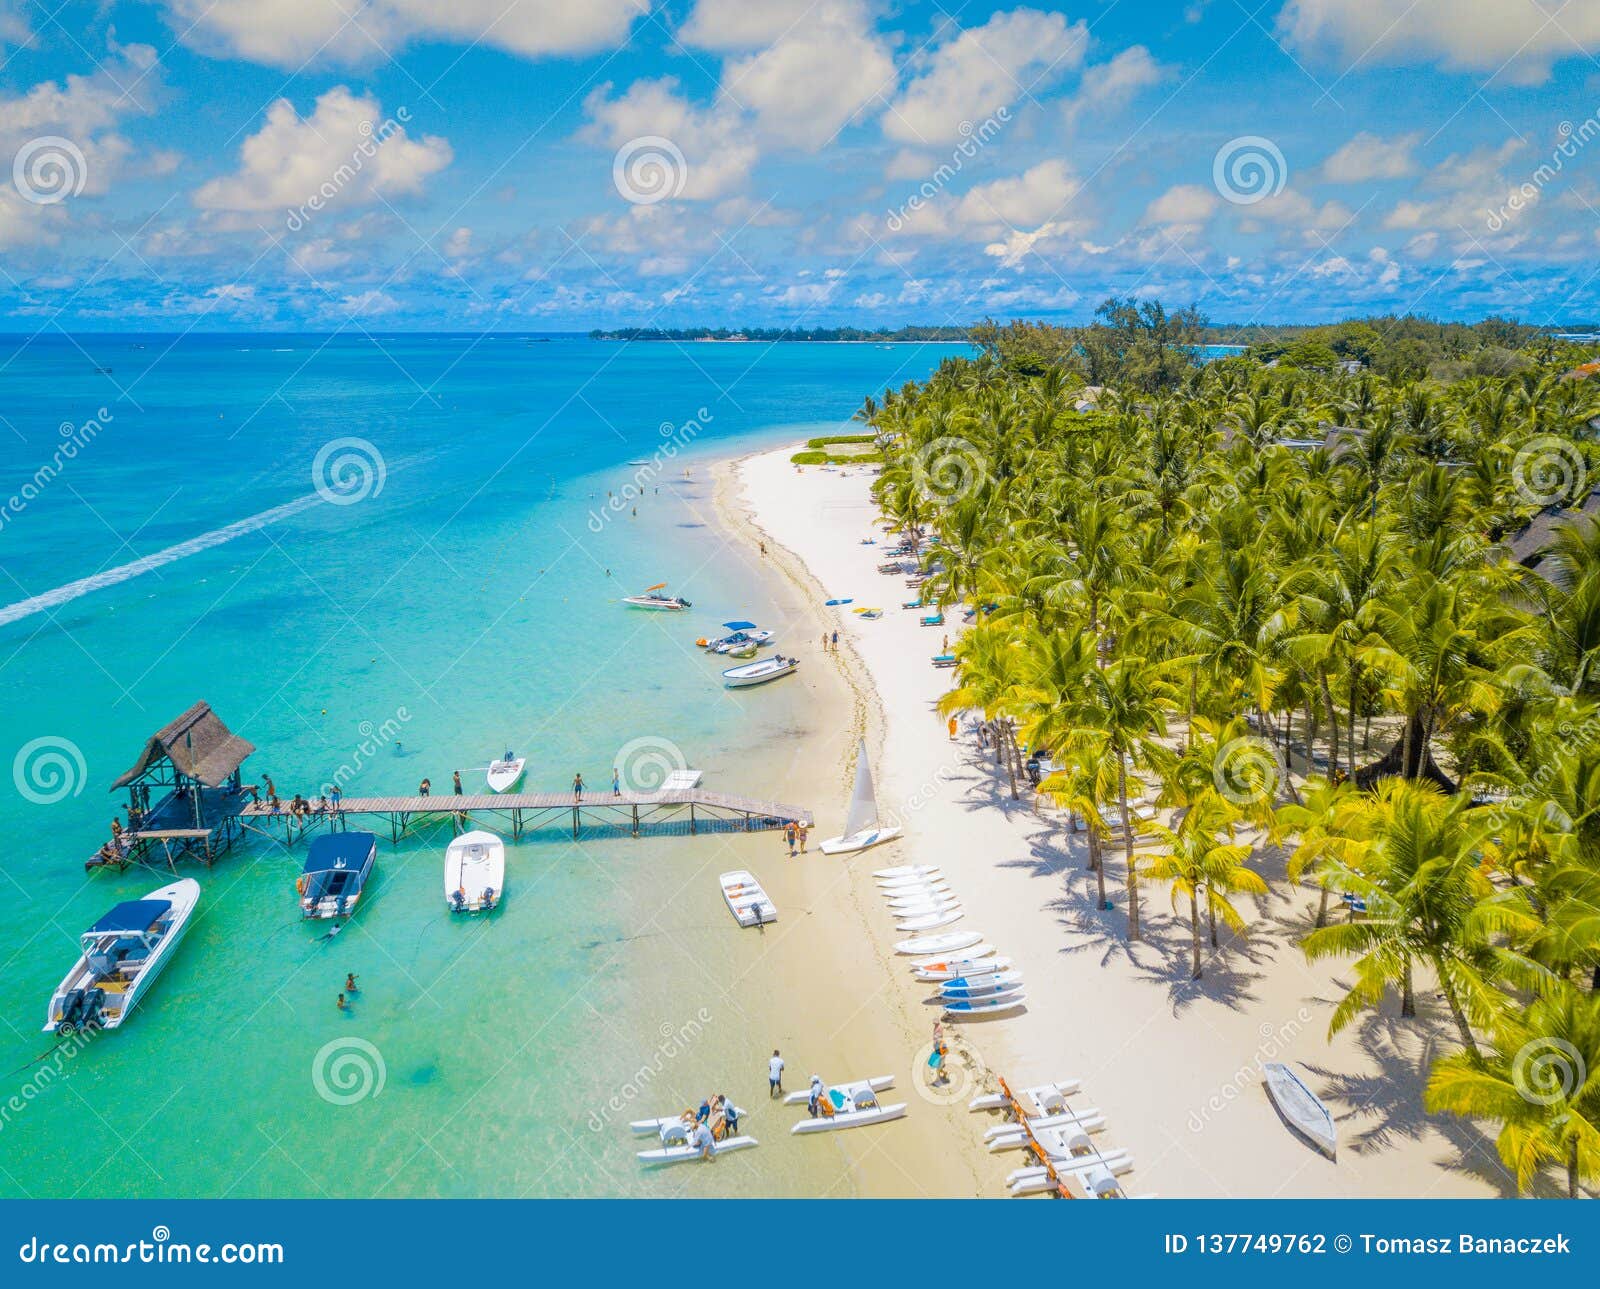 aerial view on beautiful beach in trou aux biches, mauritius